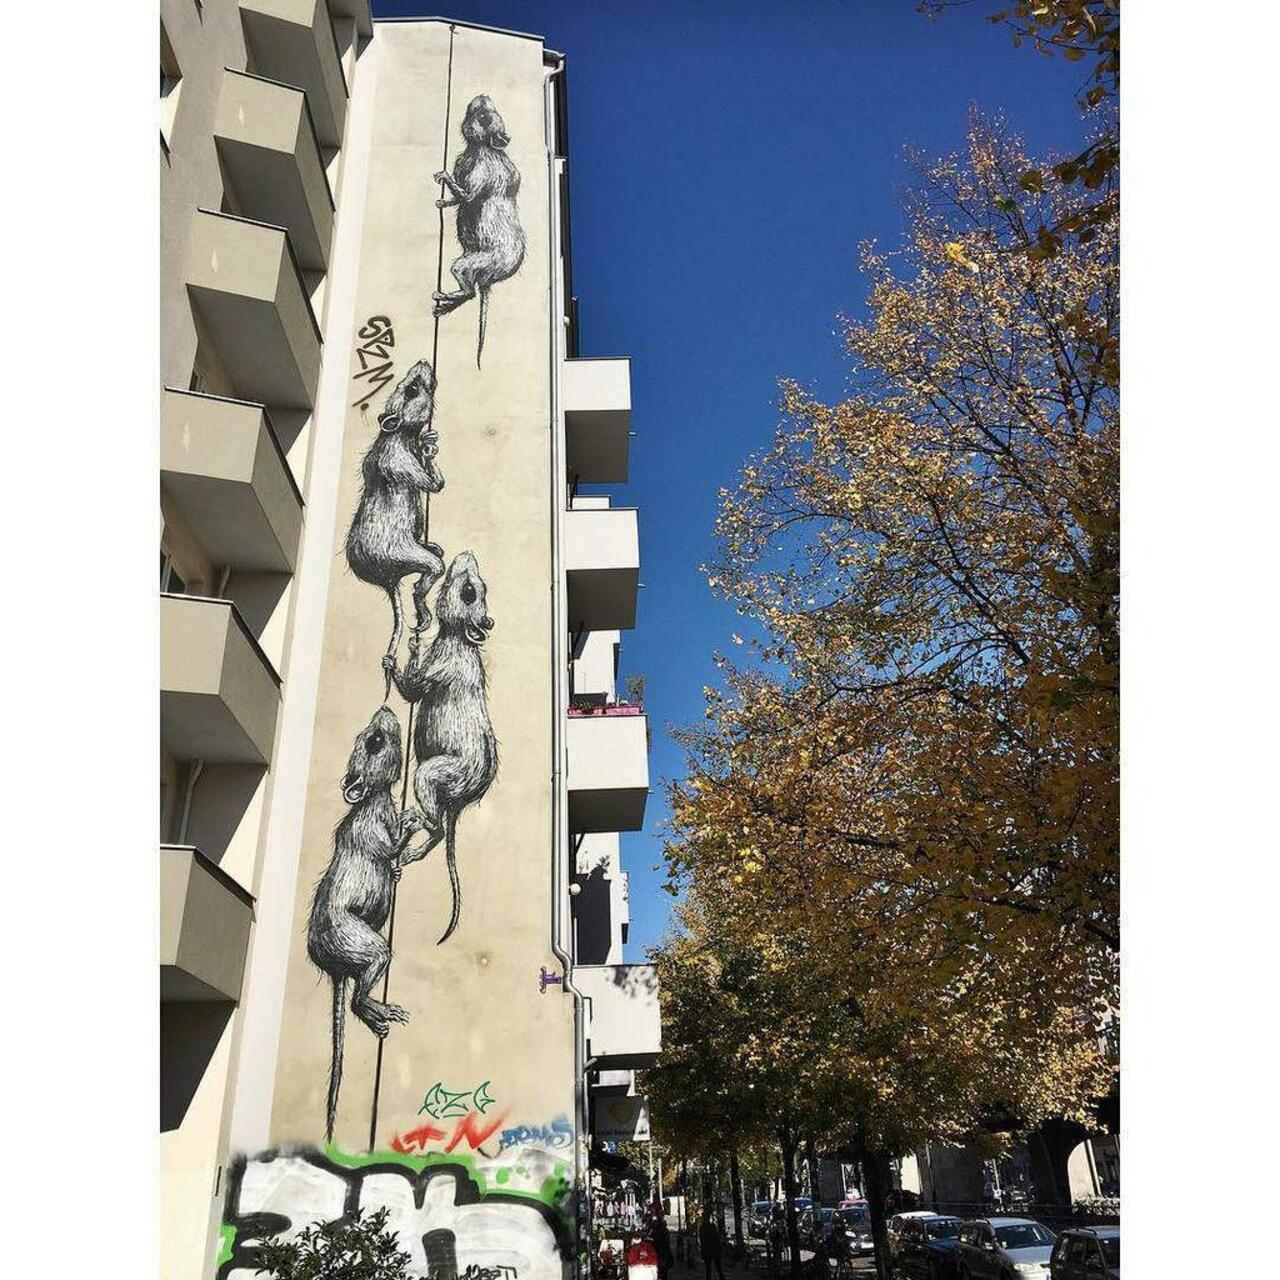 RT @StArtEverywhere: RAT 
#streetart #streetartberlin #wall #wallart #graffiti #berlin #dubistsowunderbar #urbanstreetart #art #prenzlau… http://t.co/4U7F0zyWcn